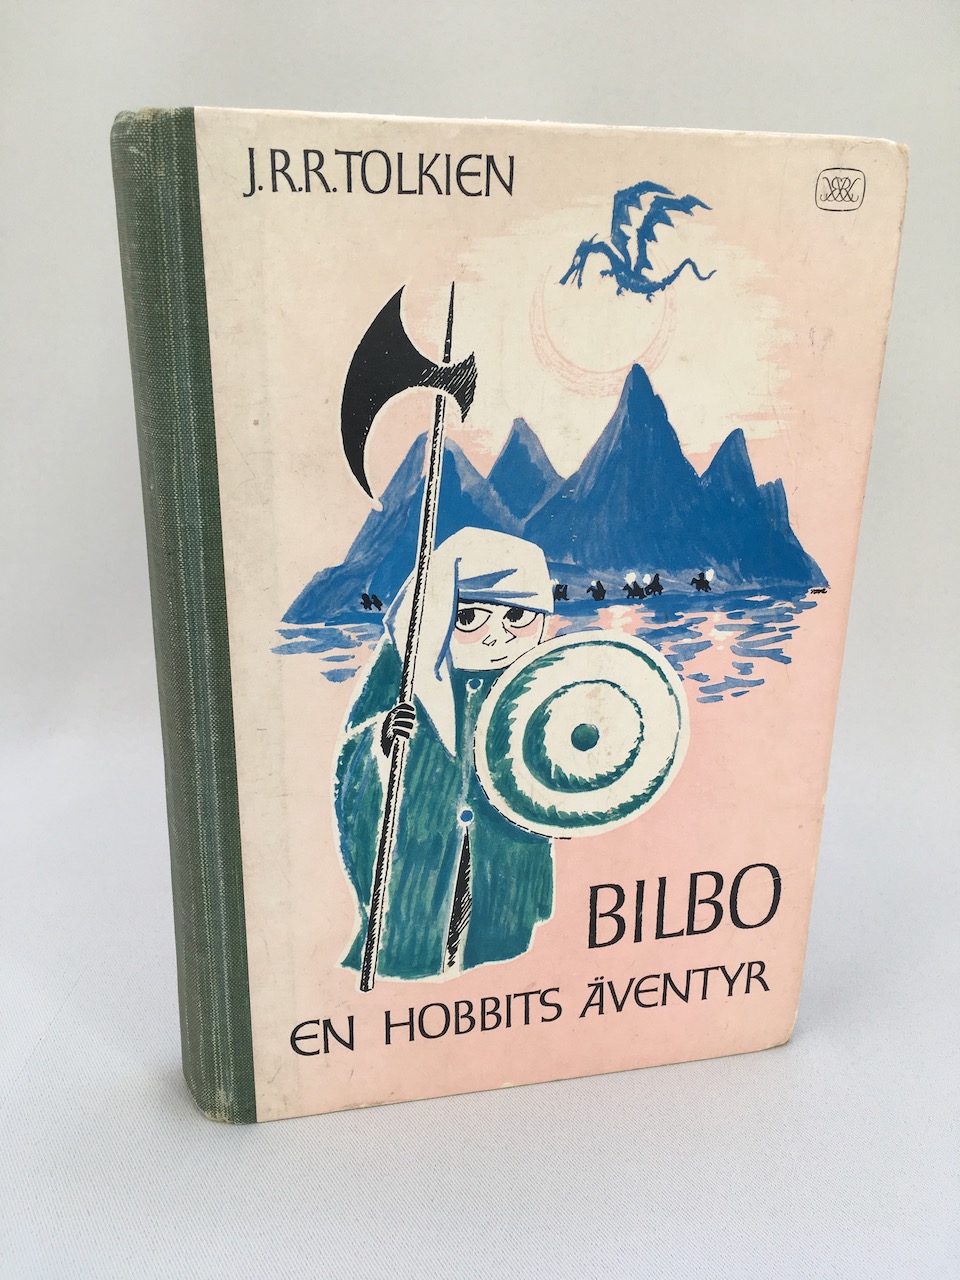 Bilbo. En Hobbits Aventyr, Translated by Britt G. Hallqvist and illustrated by Tove Jansson, 